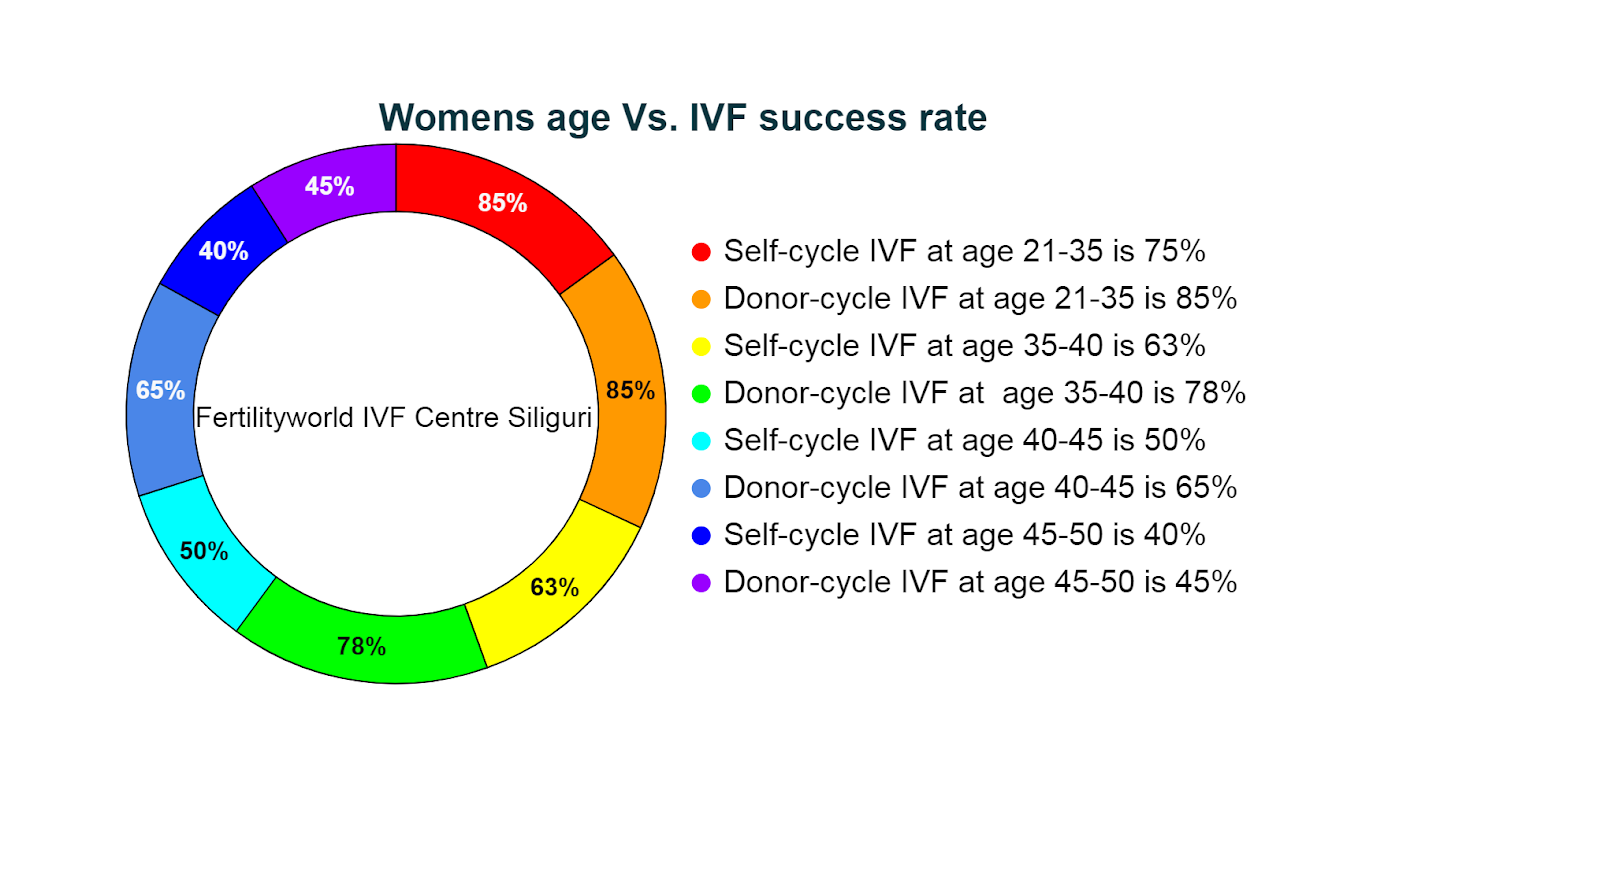 IVf success rate